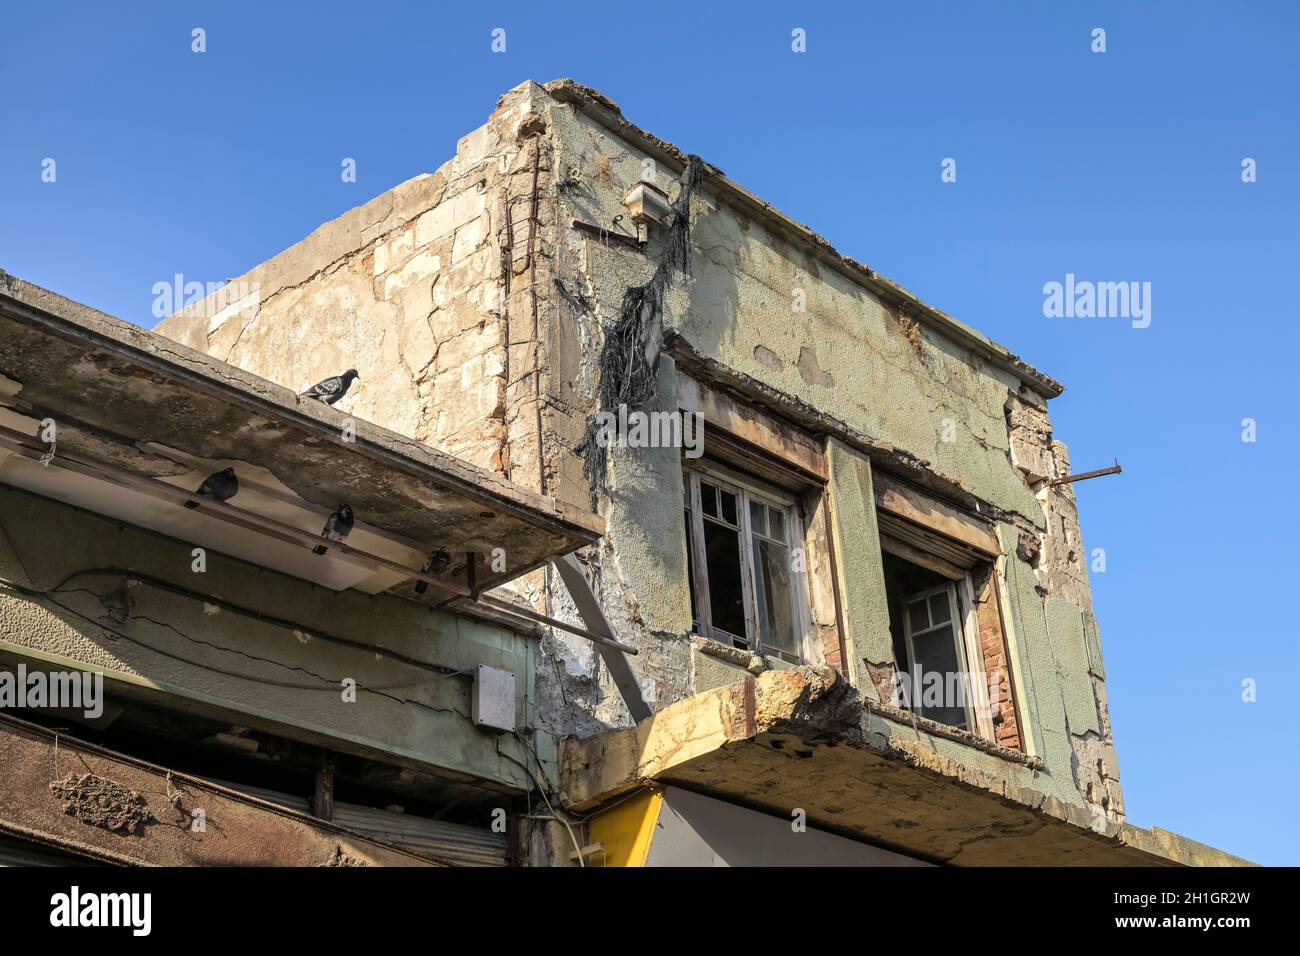 Ruine, Altbau, Splantzia Viertel, Chania, Kreta, Griechenland Foto Stock